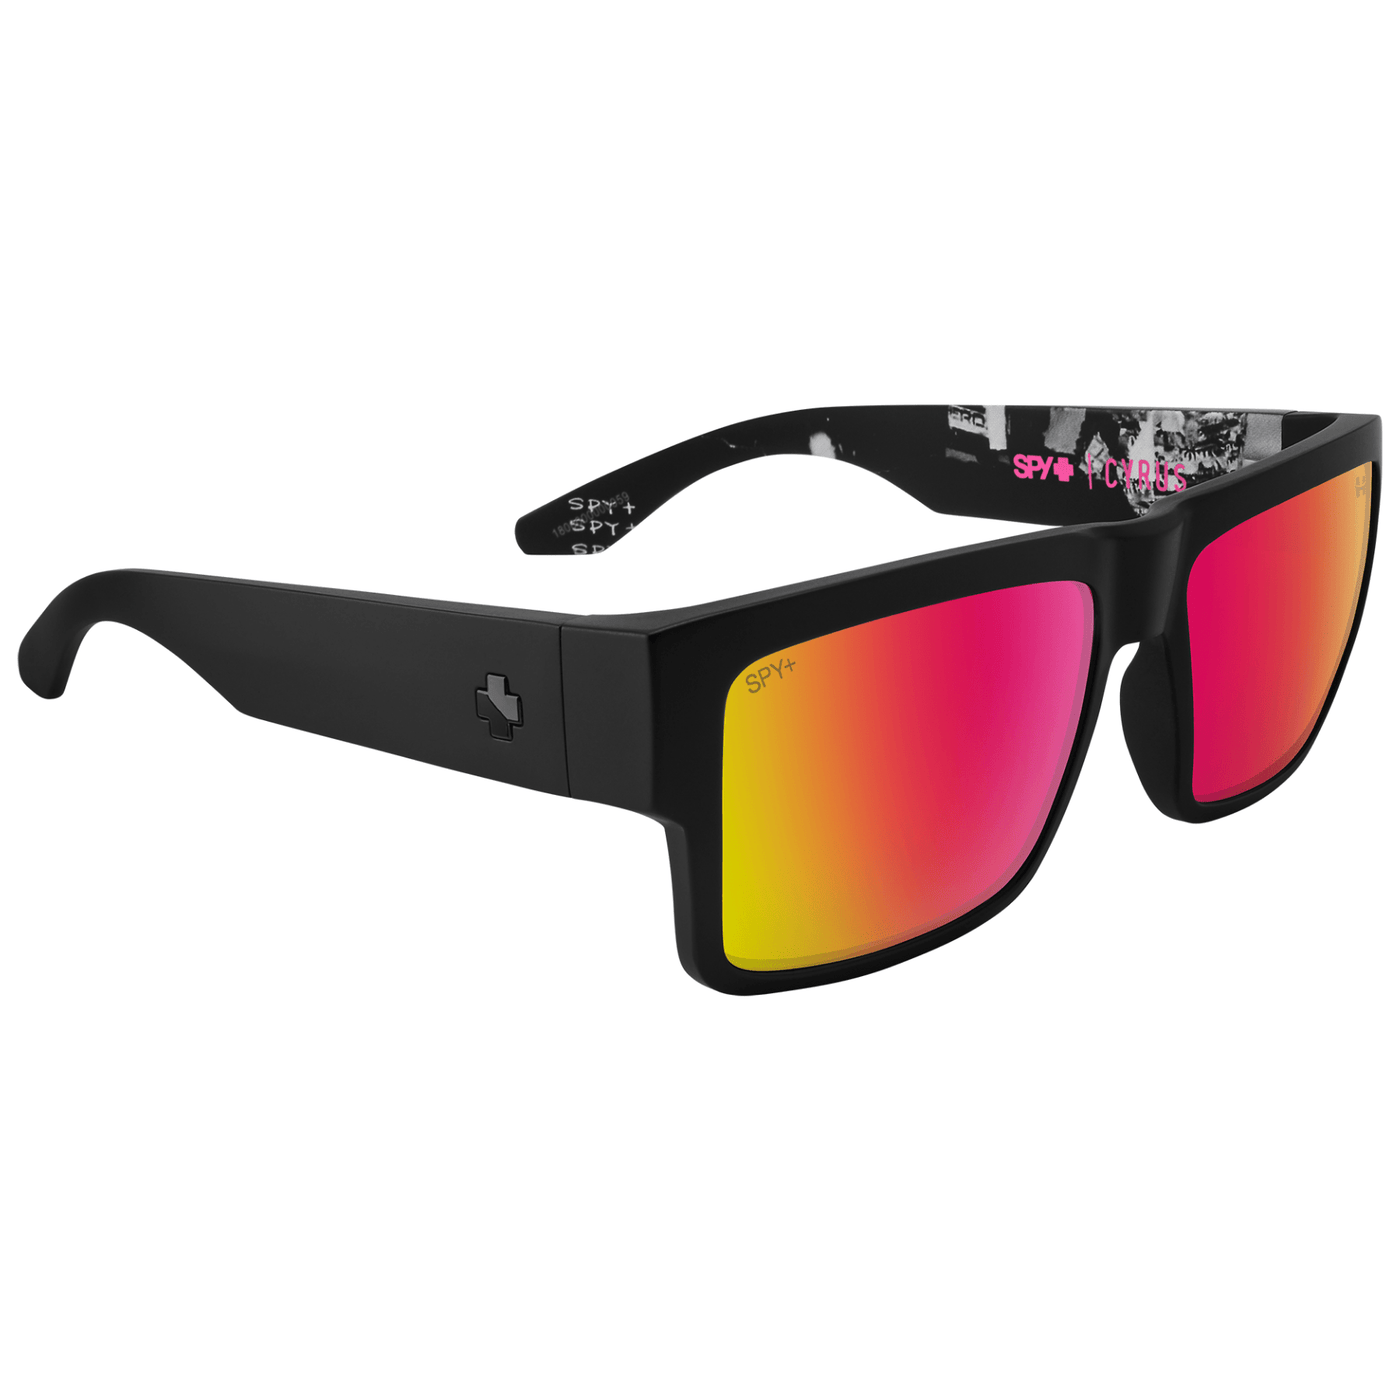 spy cyrus sunglasses - pink